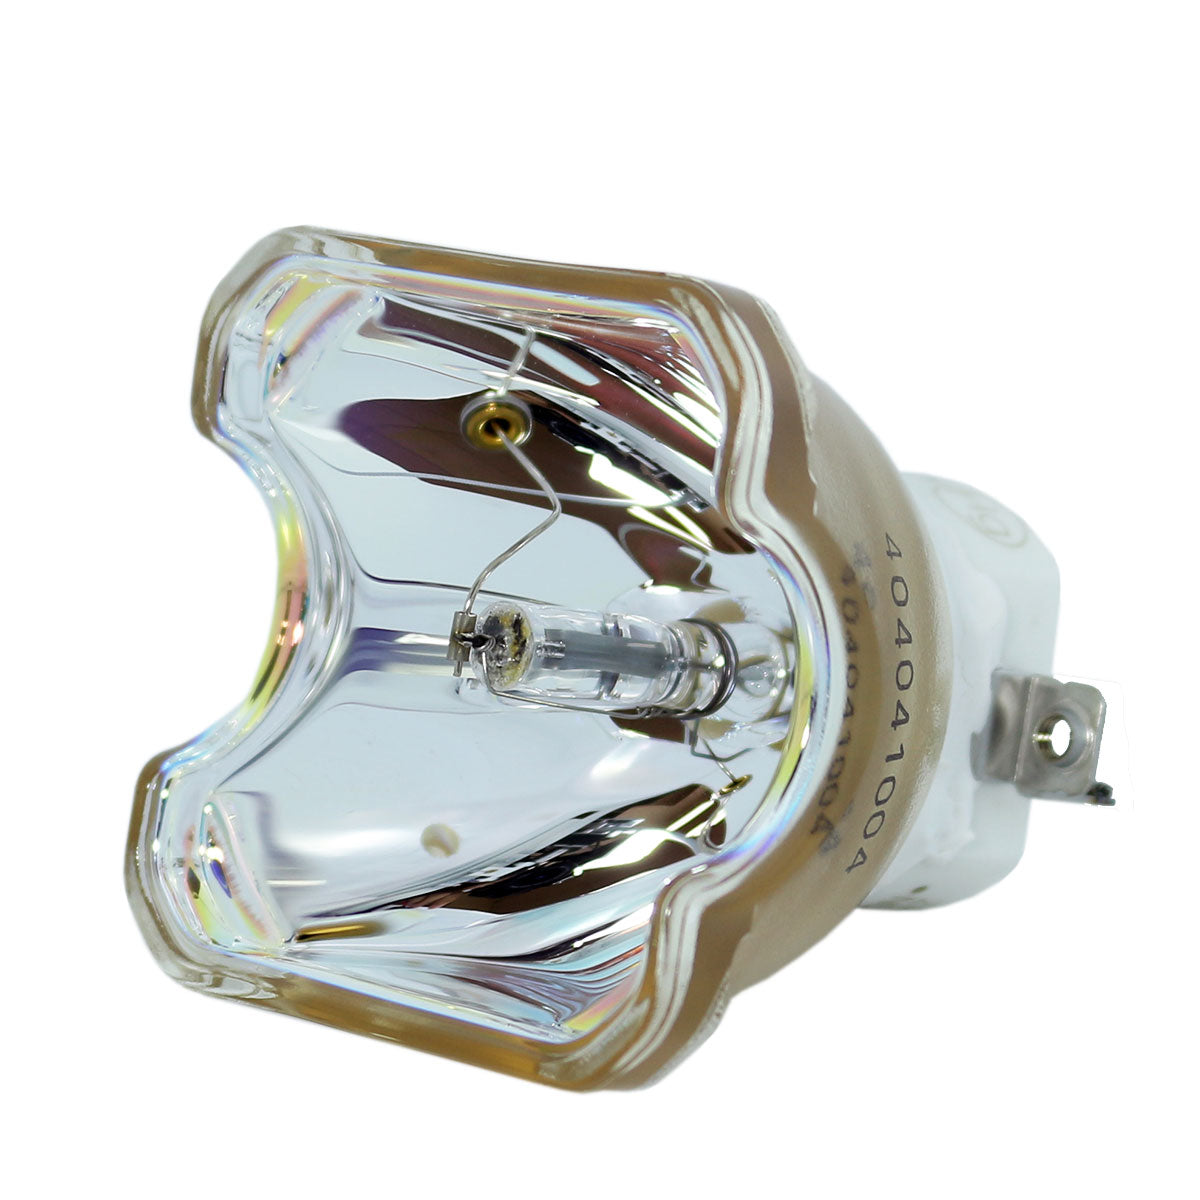 Hitachi DT01055 Ushio Projector Bare Lamp